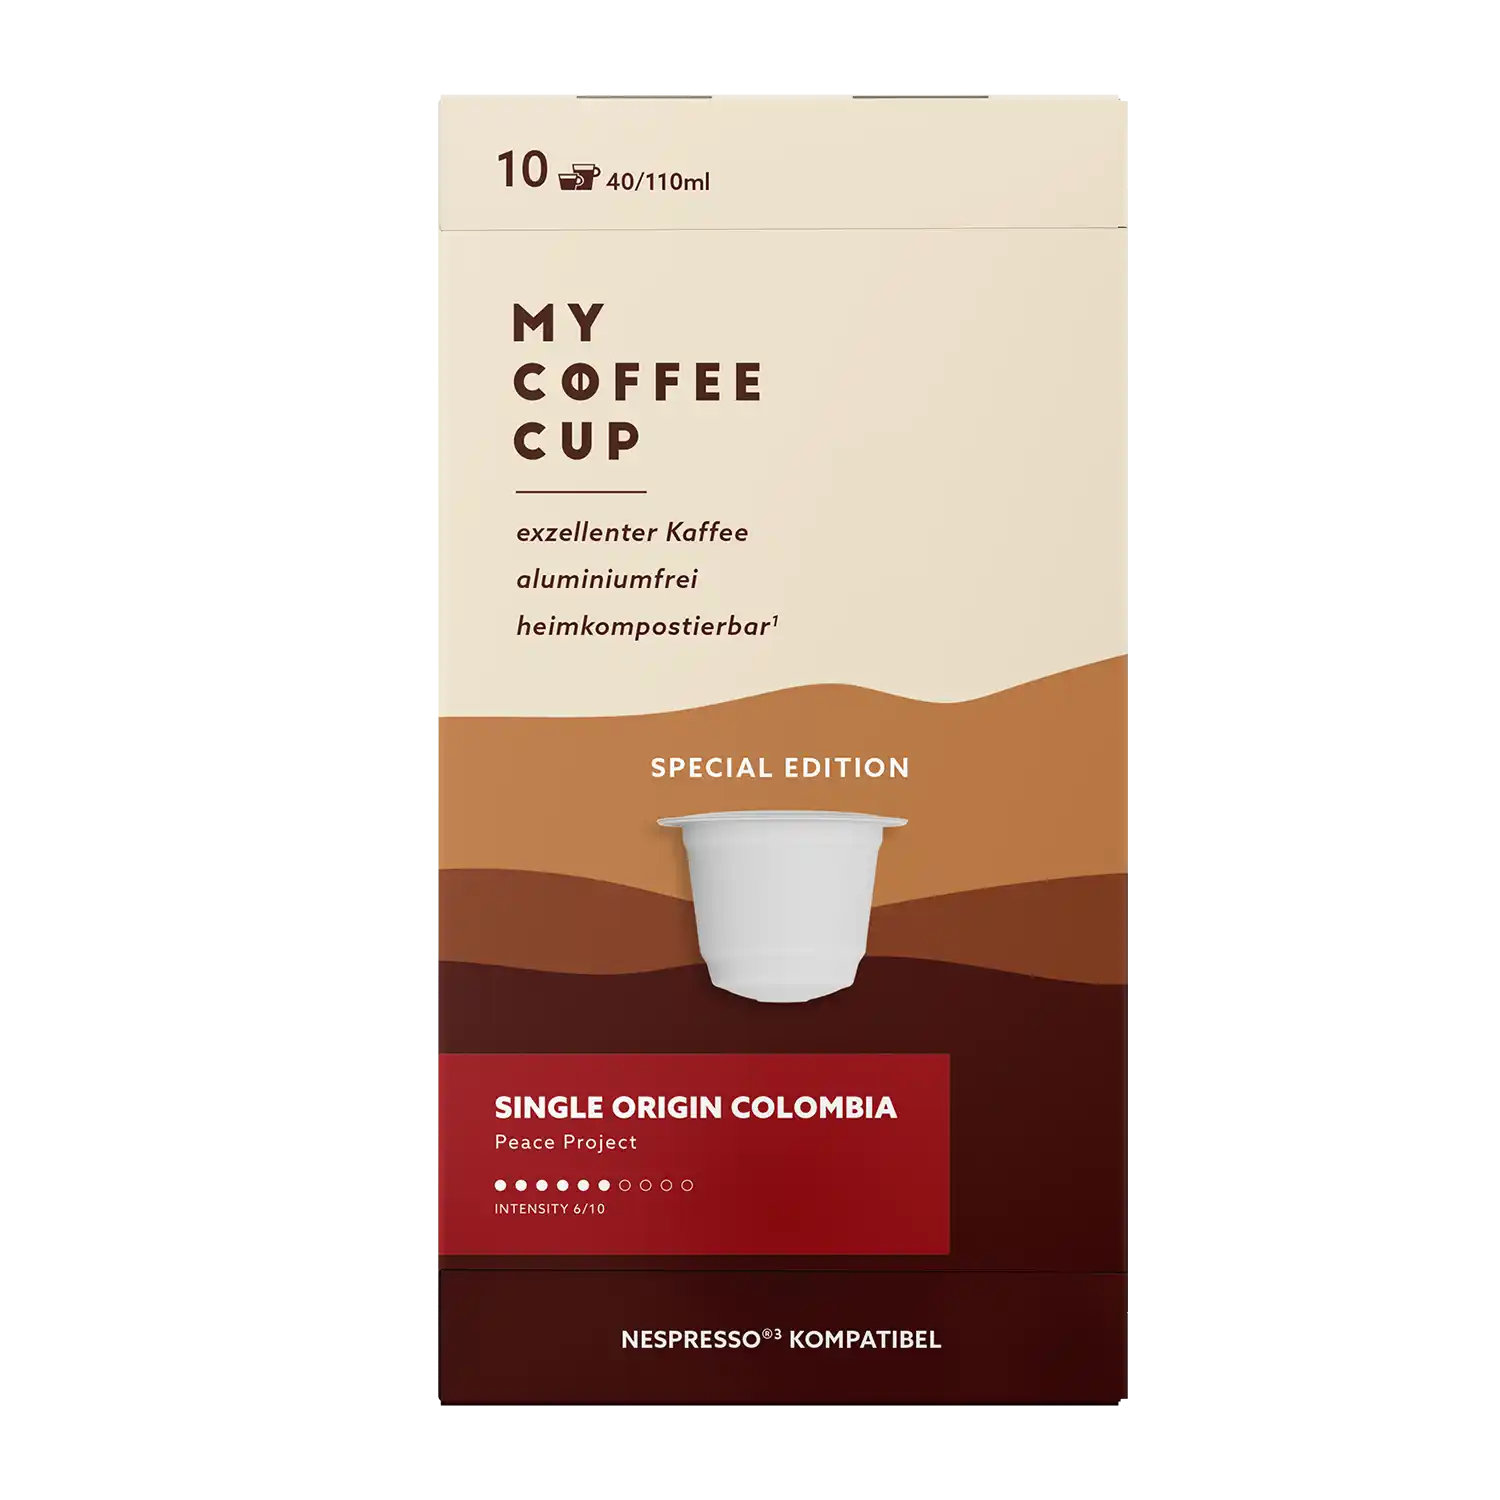 Nespresso kompatible Kapseln - single origin colombia special edition - MyCoffeeCup.de